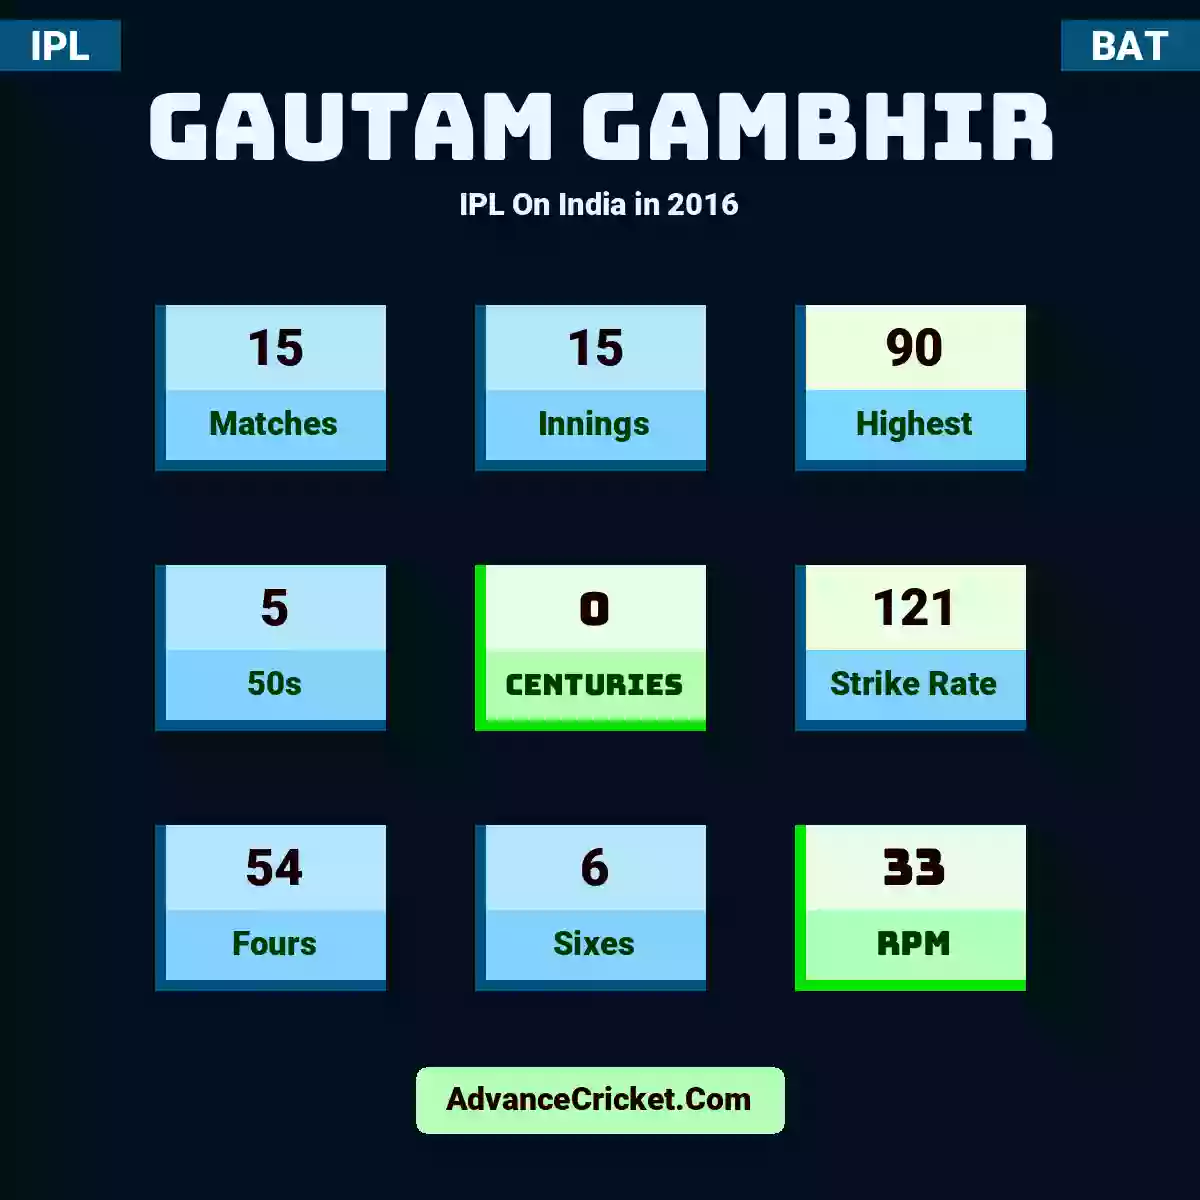 Gautam Gambhir IPL  On India in 2016, Gautam Gambhir played 15 matches, scored 90 runs as highest, 5 half-centuries, and 0 centuries, with a strike rate of 121. G.Gambhir hit 54 fours and 6 sixes, with an RPM of 33.